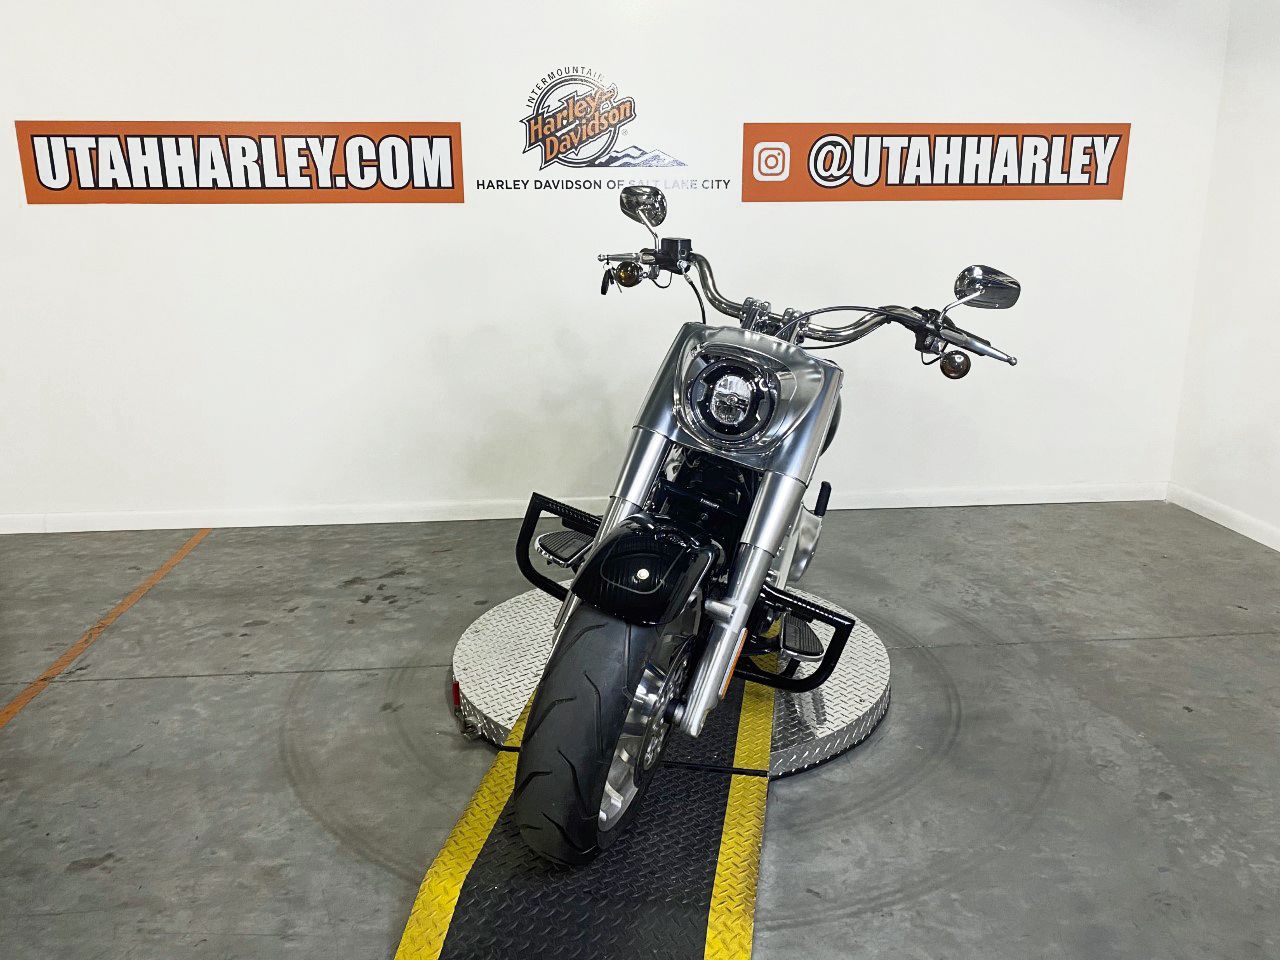 2018 Harley-Davidson Fat Boy in Salt Lake City, Utah - Photo 3